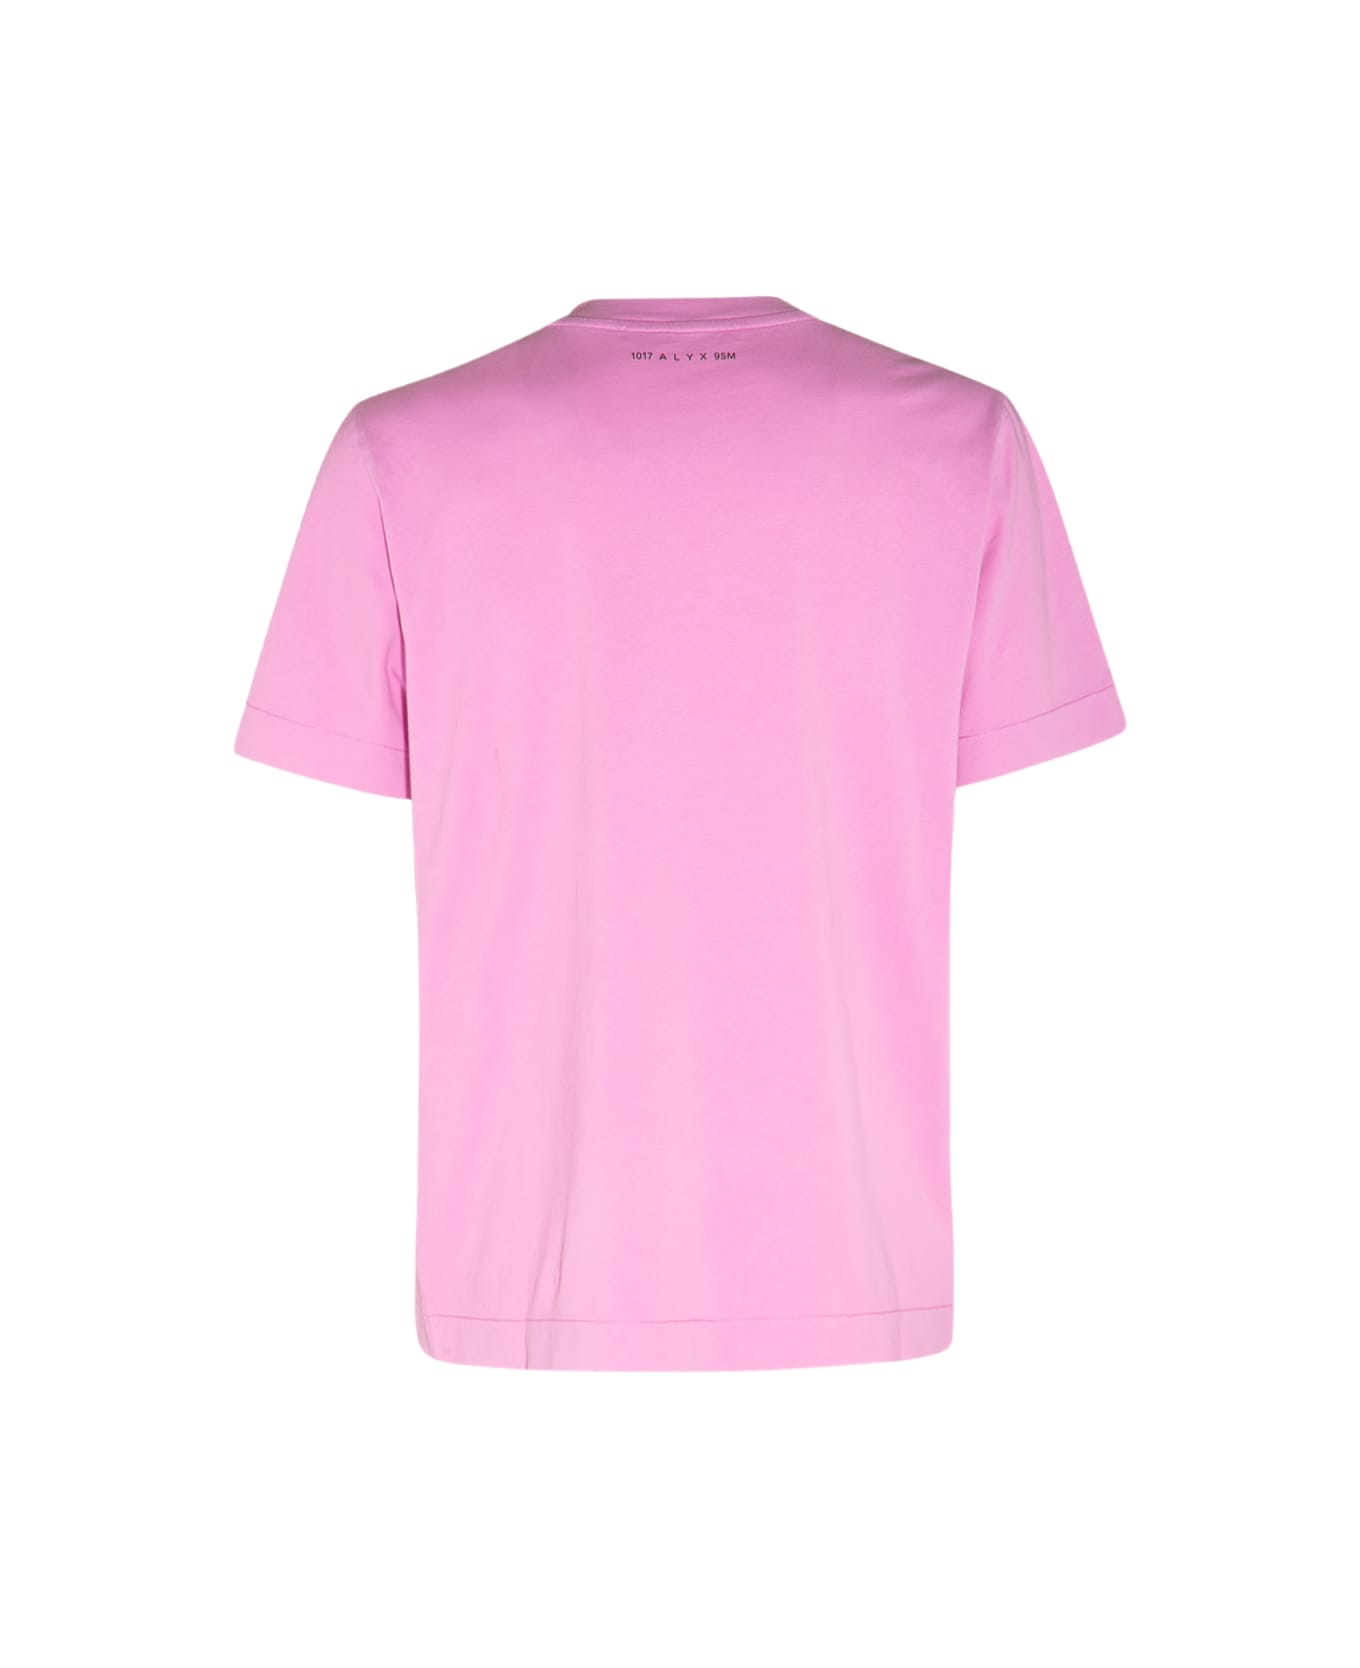 1017 ALYX 9SM Pink Cotton Icon Flower T-shirt - PINK B シャツ